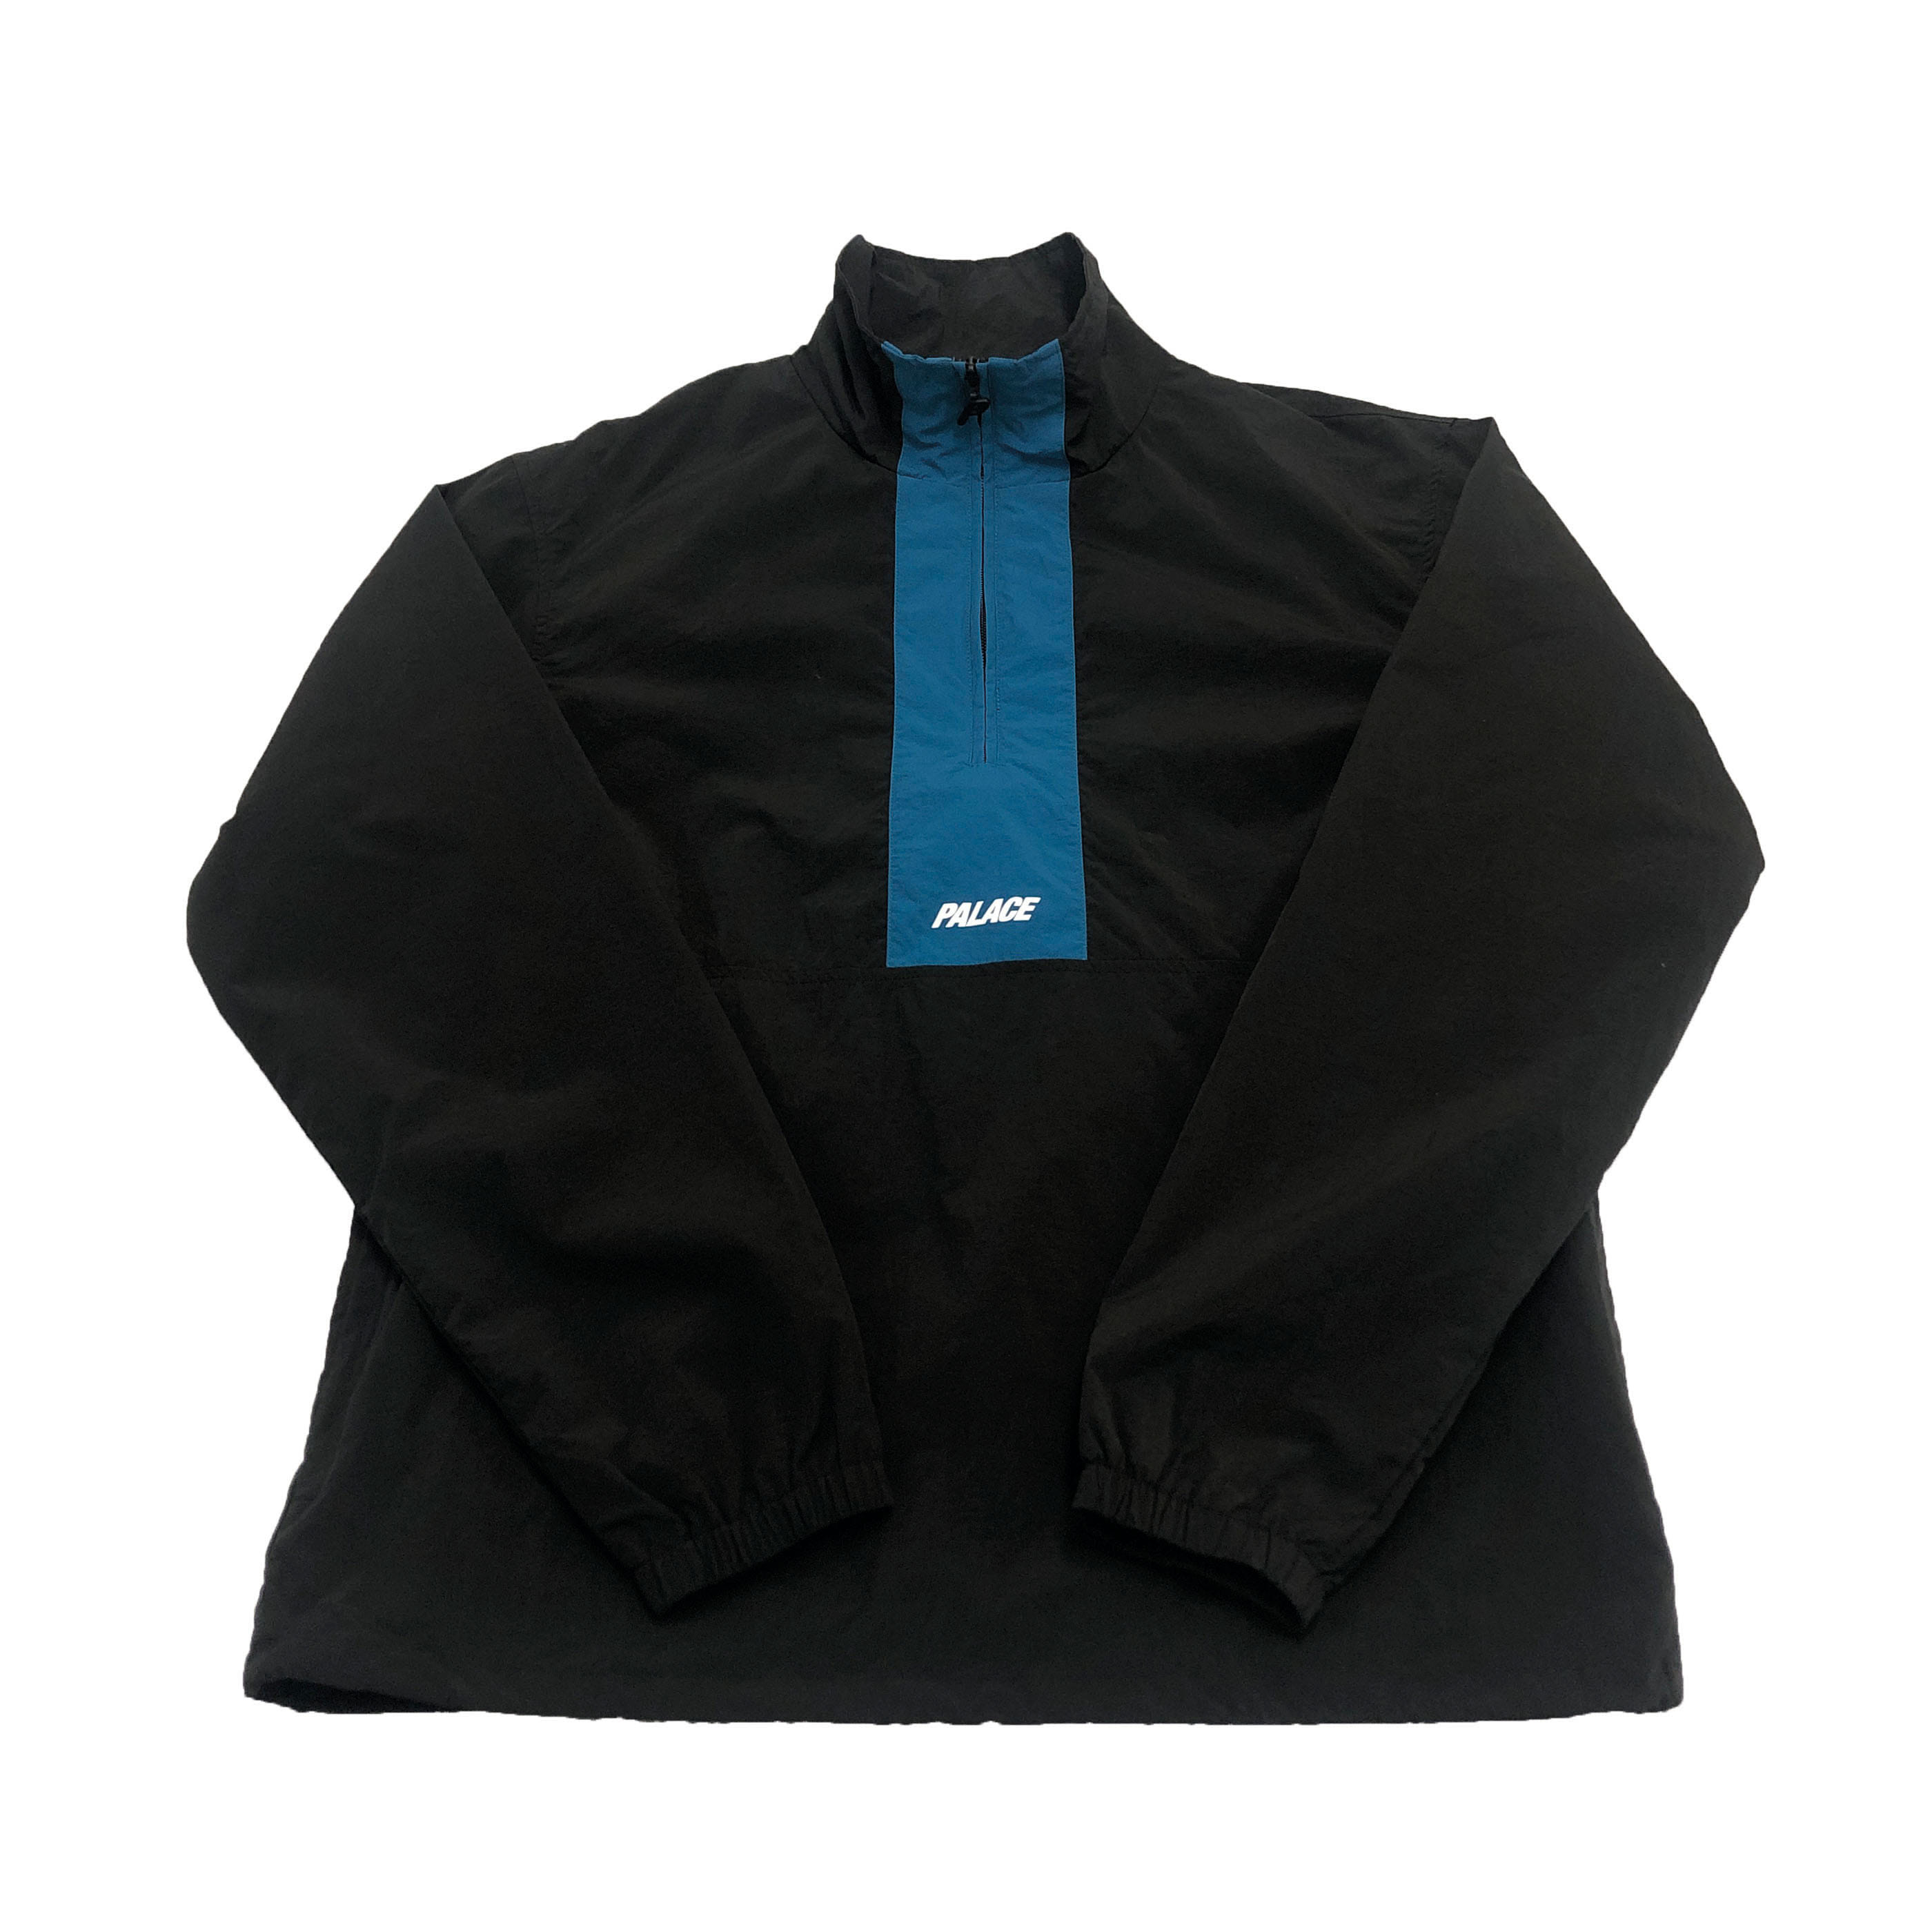 [Palace] Hi Grade Shell Top Black Jacket - Size L